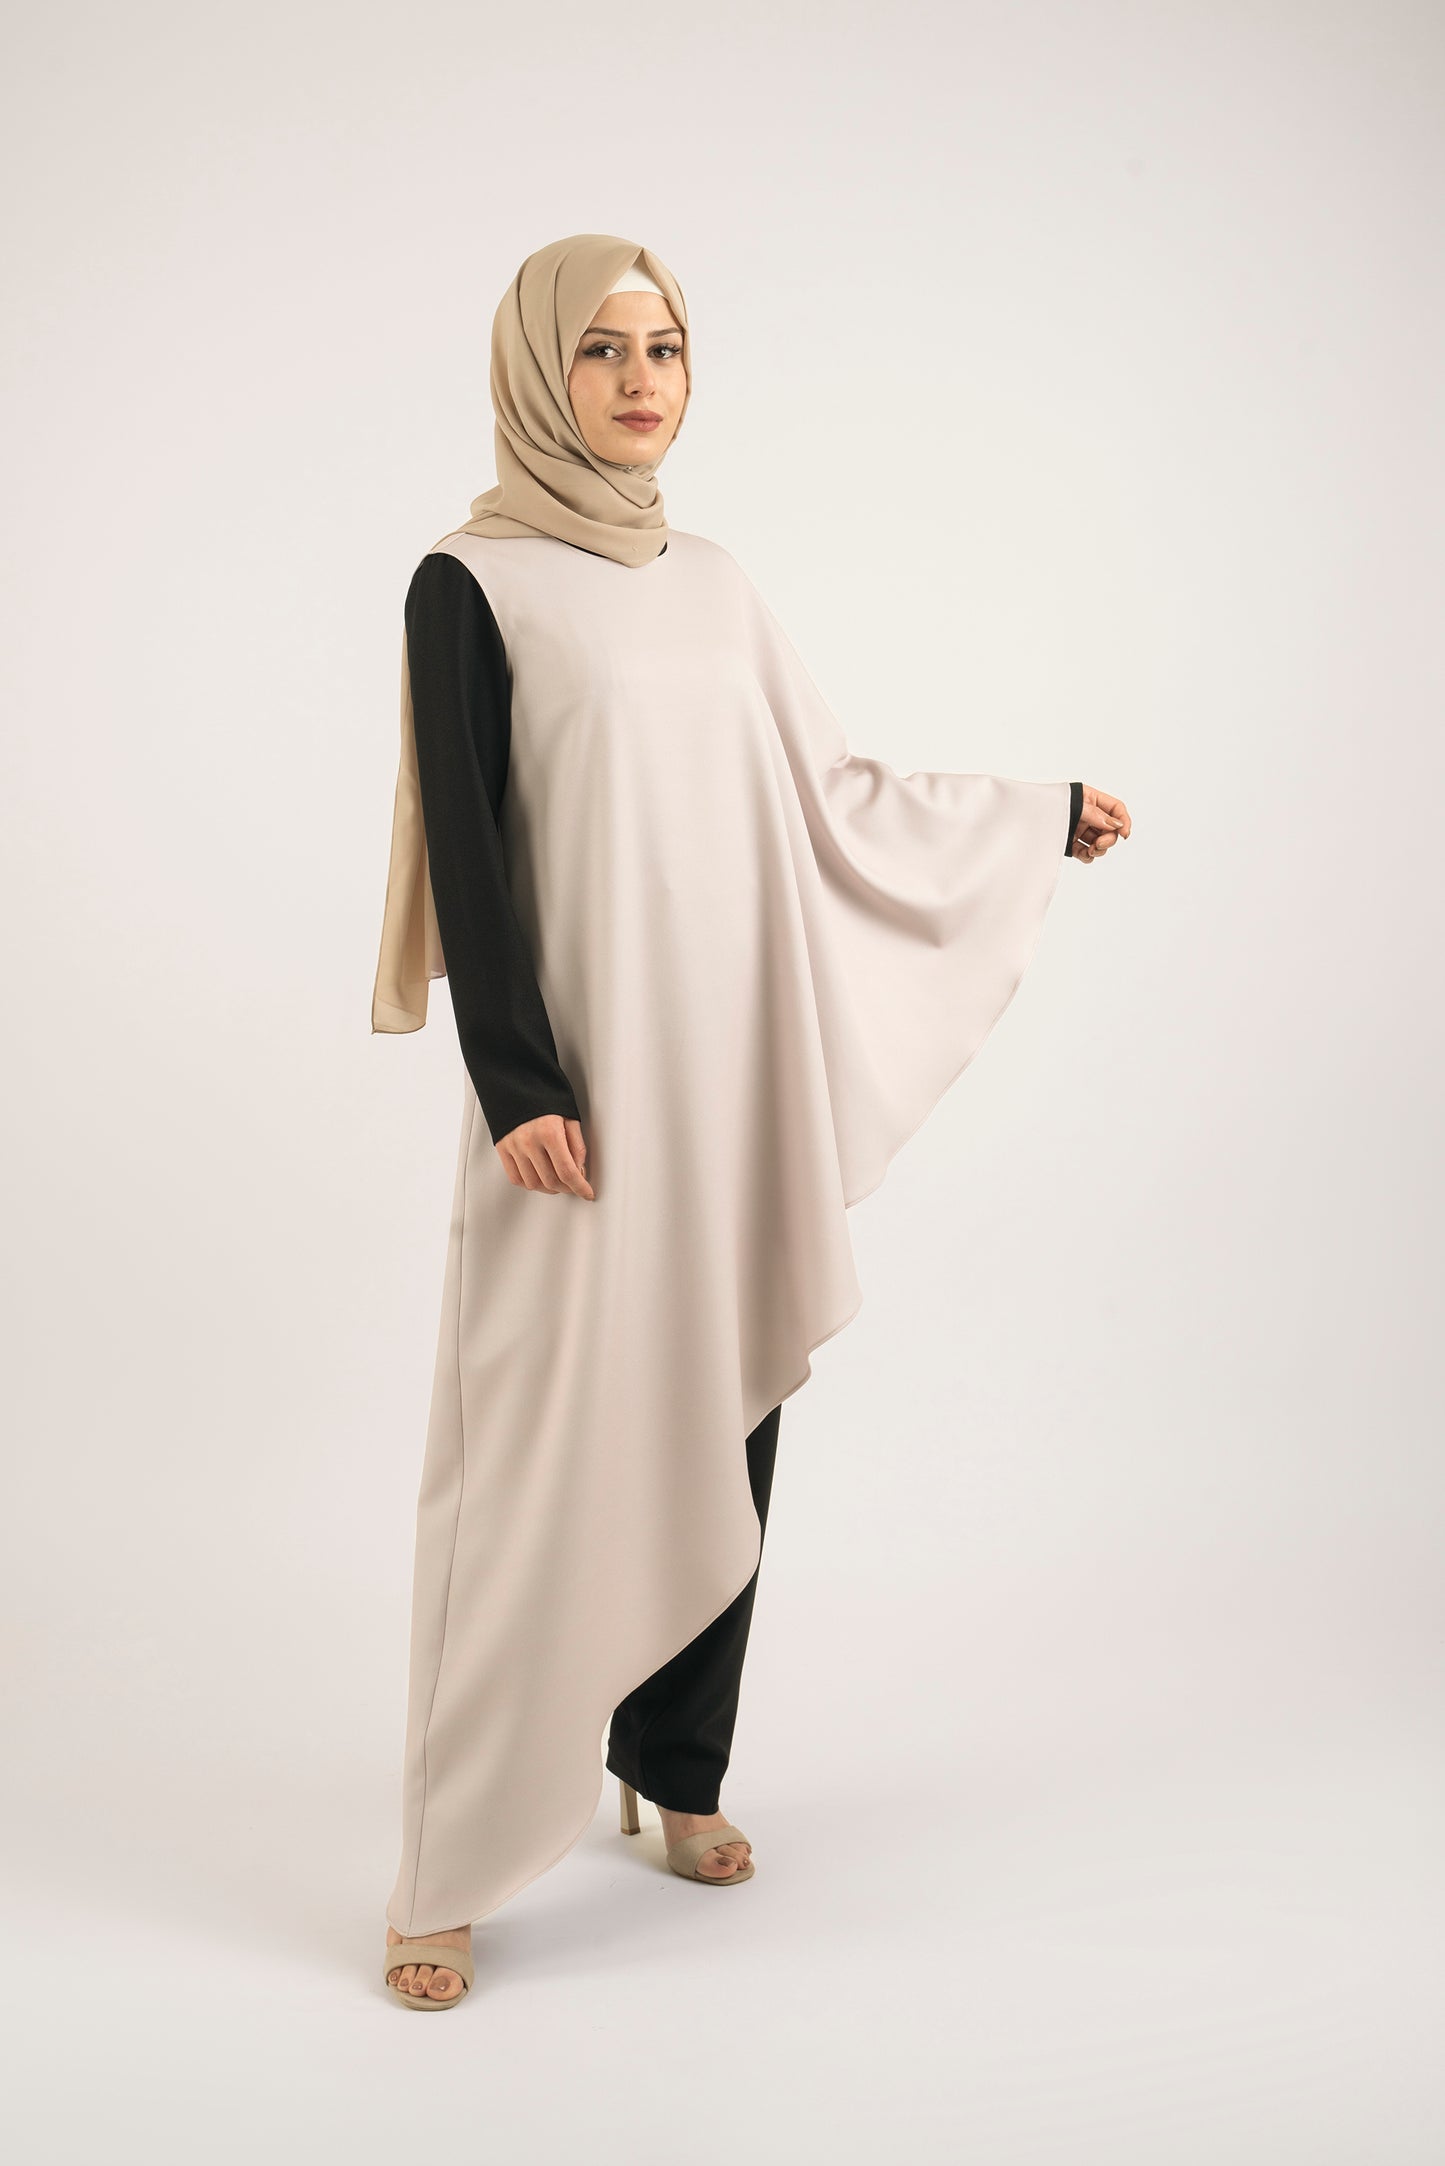 Cosmic Latte Tulum - Modest Dresses, Abaya, Long Sleeve dress!